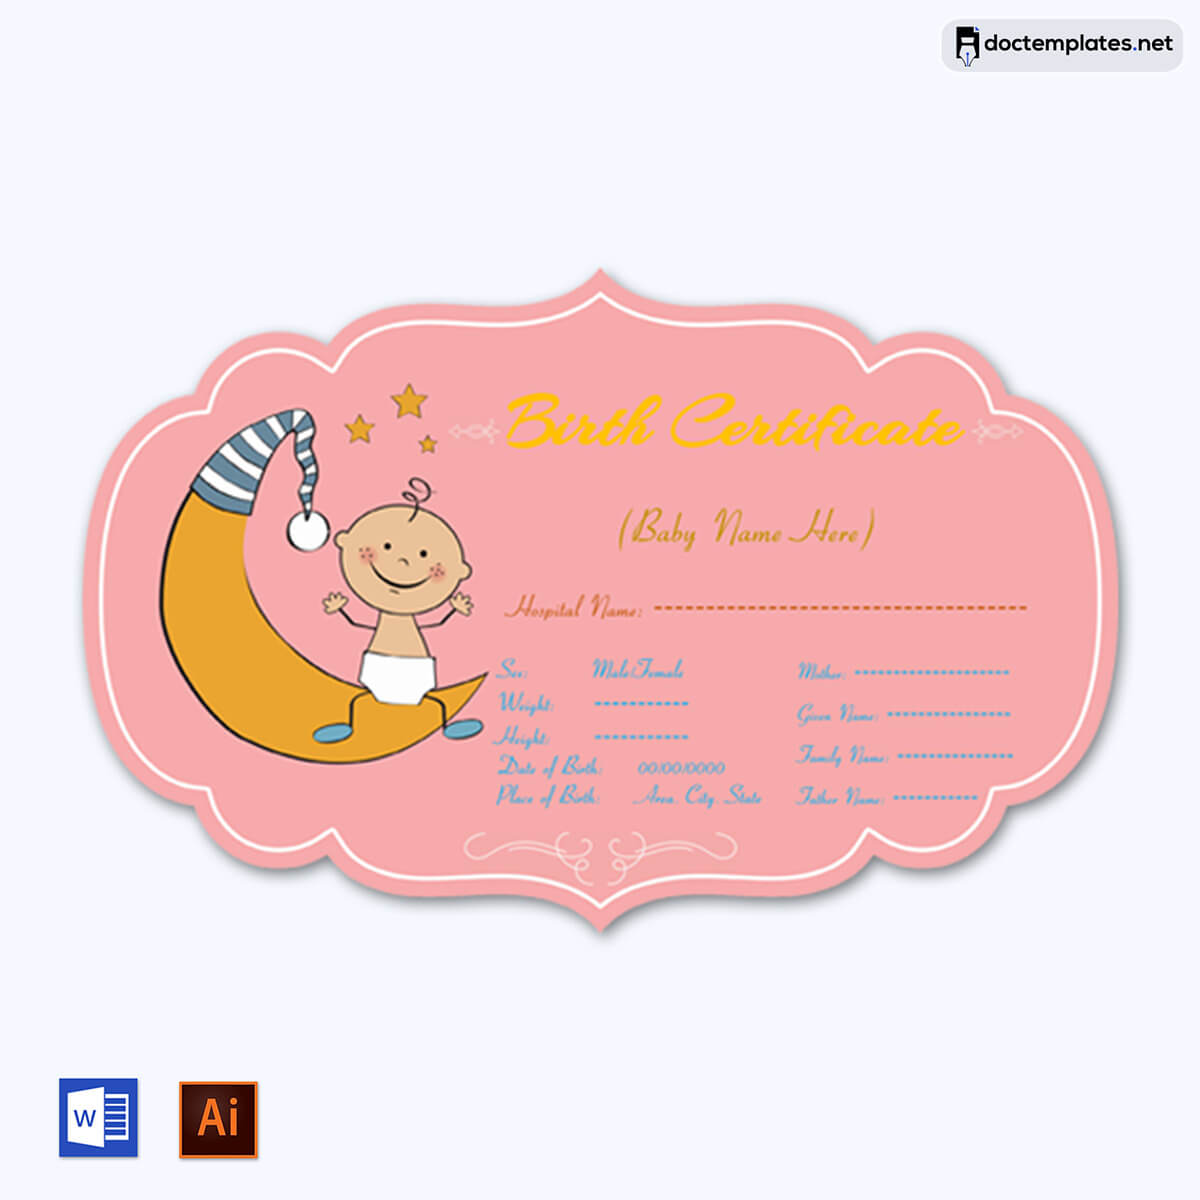 
birth certificate template word 02